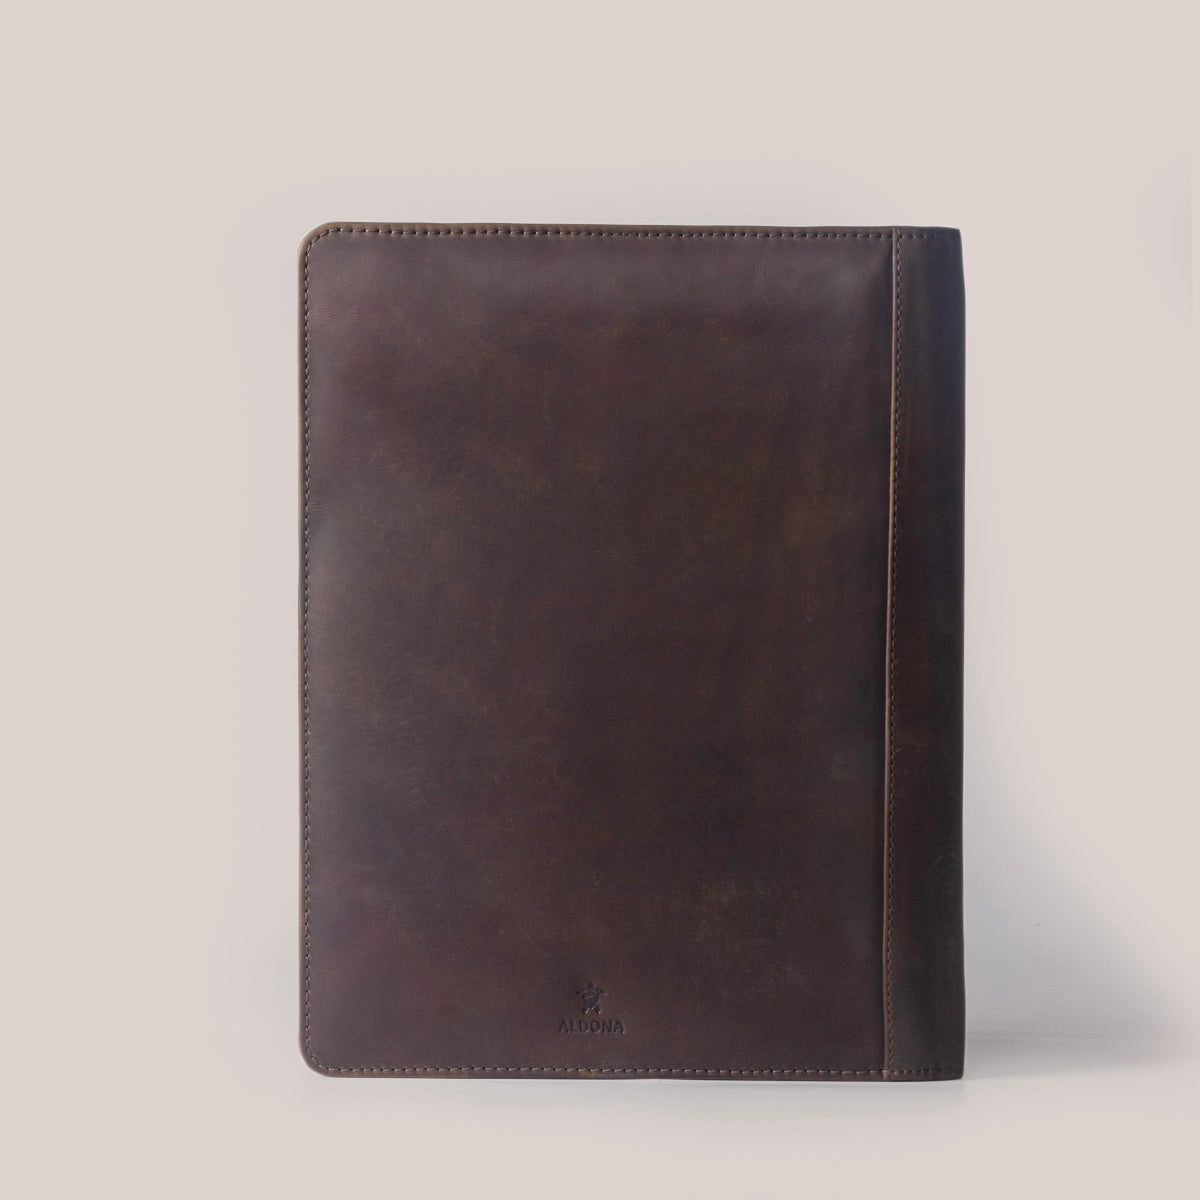 Buy Aldona A4 Leather Padfolio Folder